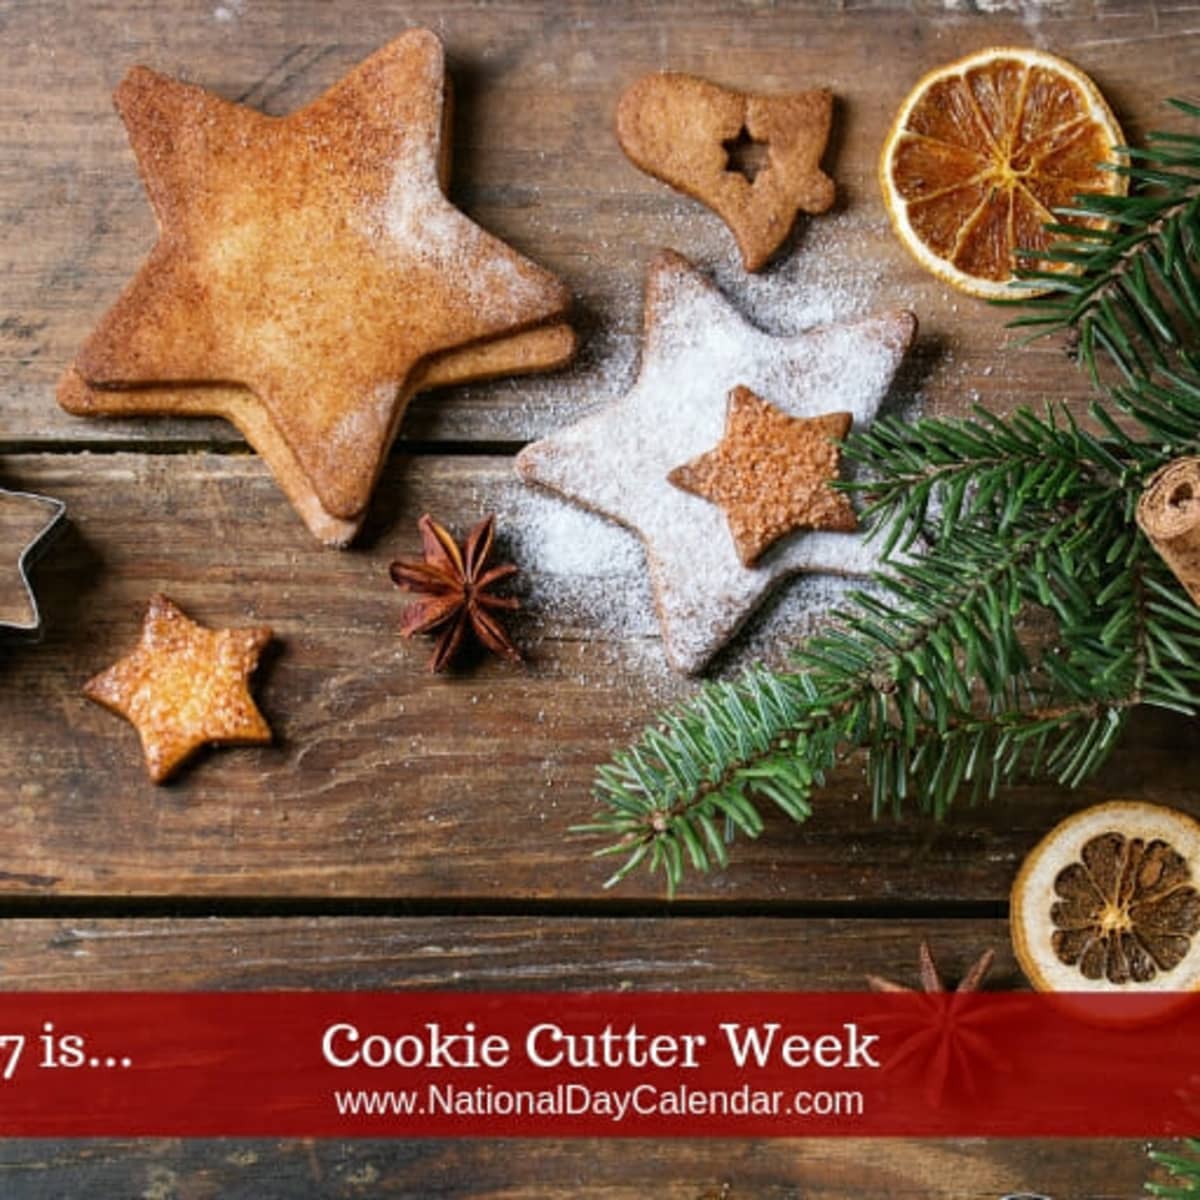 NATIONAL COOKIE CUTTER WEEK - First Week in December - National Day Calendar